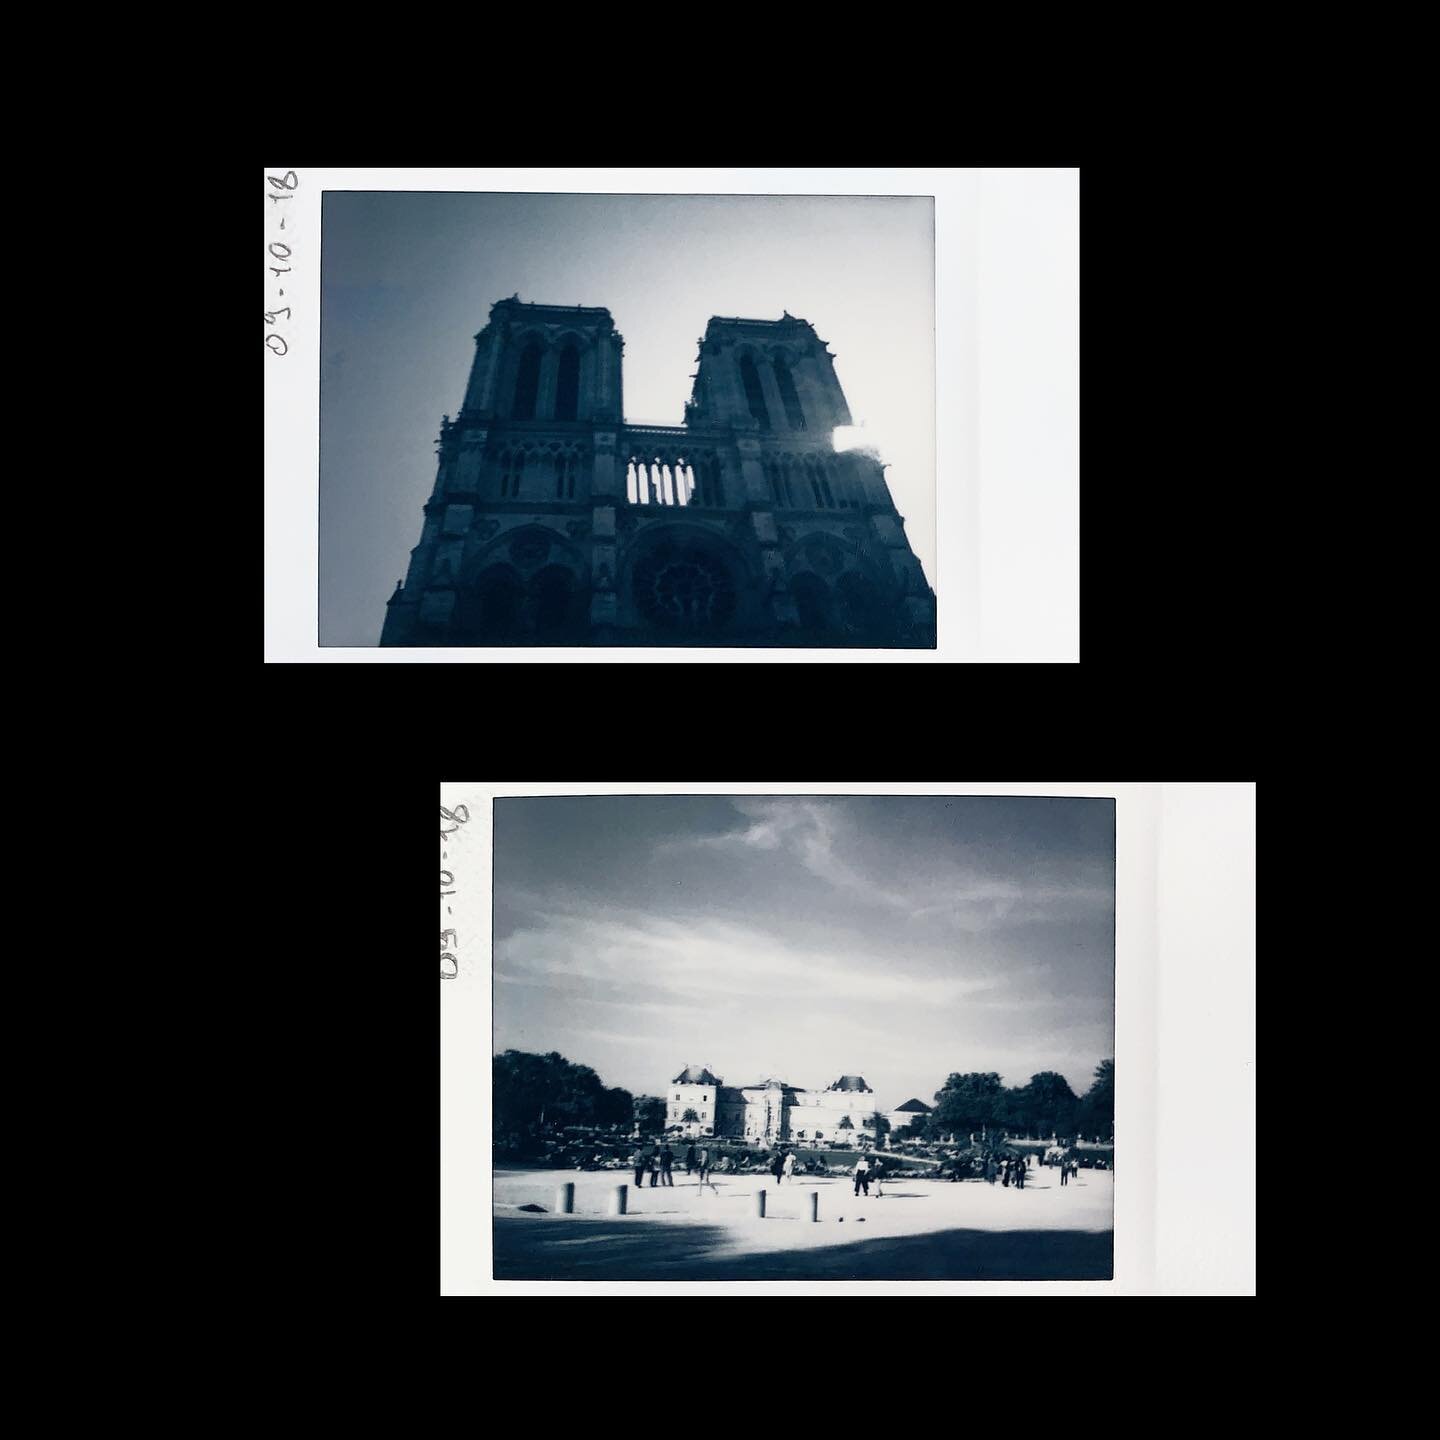 #paris #france #jardinduluxembourg #monochrome #blackandwhite #blackandwhitephotography #architecture #landscape #polaroid #polaroids #instantphoto #photography #fujifilm #instax #photo #photos #pic #pics #picture #pictures #snapshot #art #picoftheda